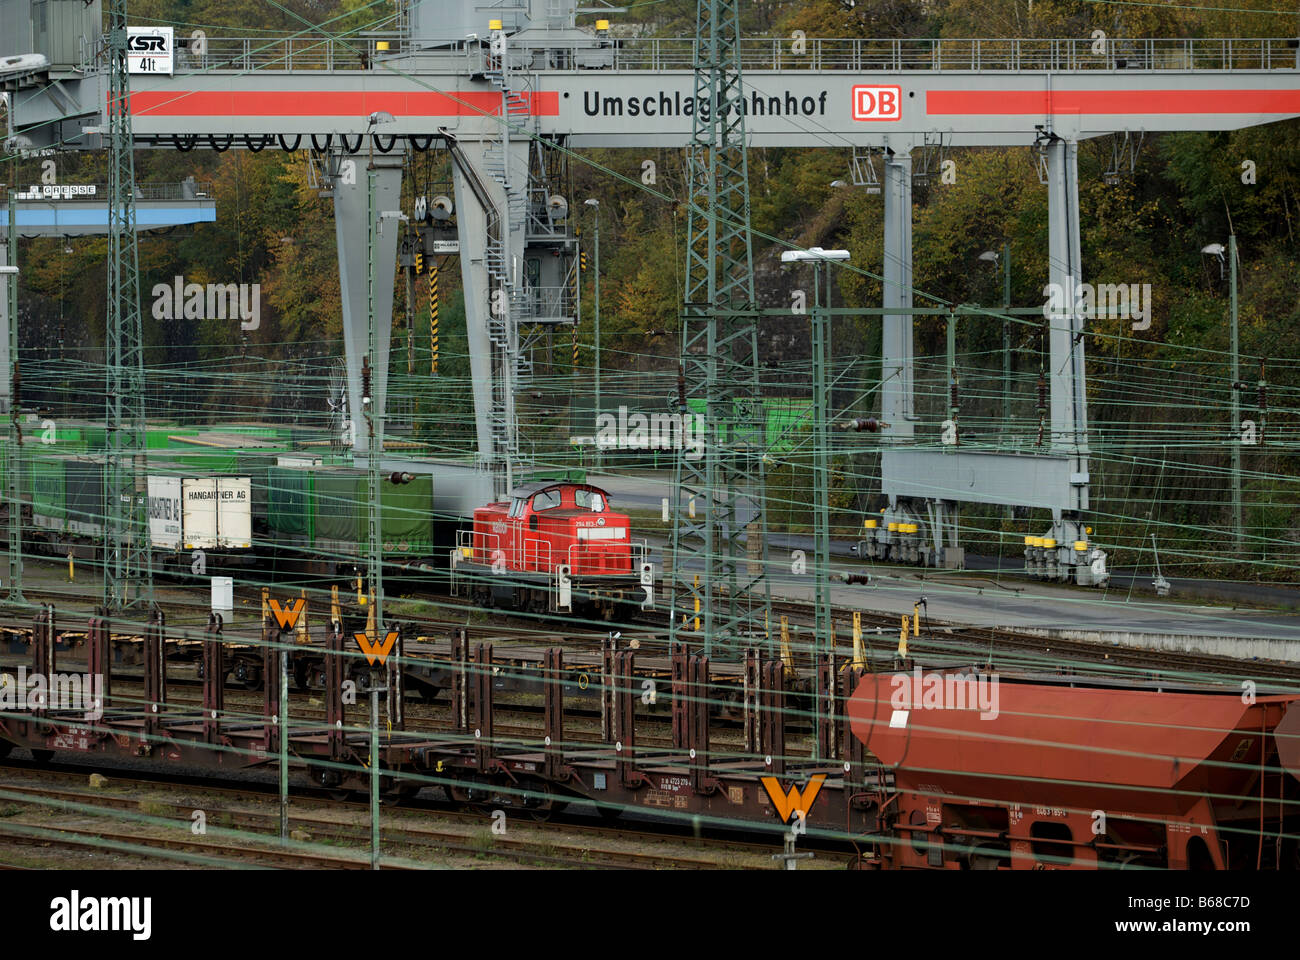 Umschlagbahnhof (rail freight terminal) Hagen, North Rhine-Westphalia, Germany. Stock Photo